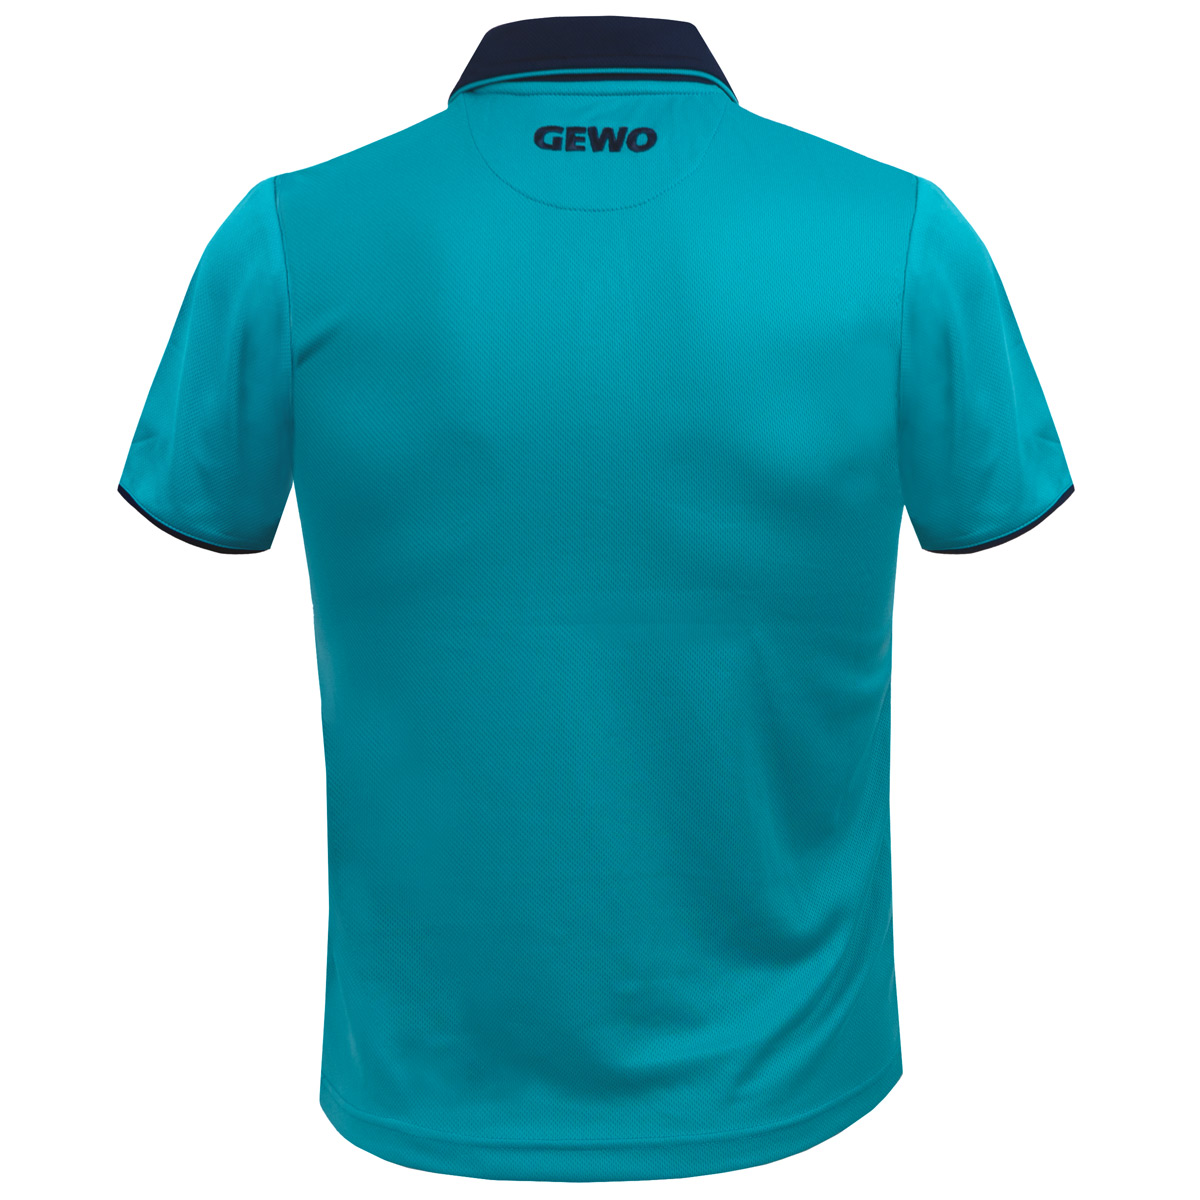 GEWO Shirt Sawona turquoise/blue XS